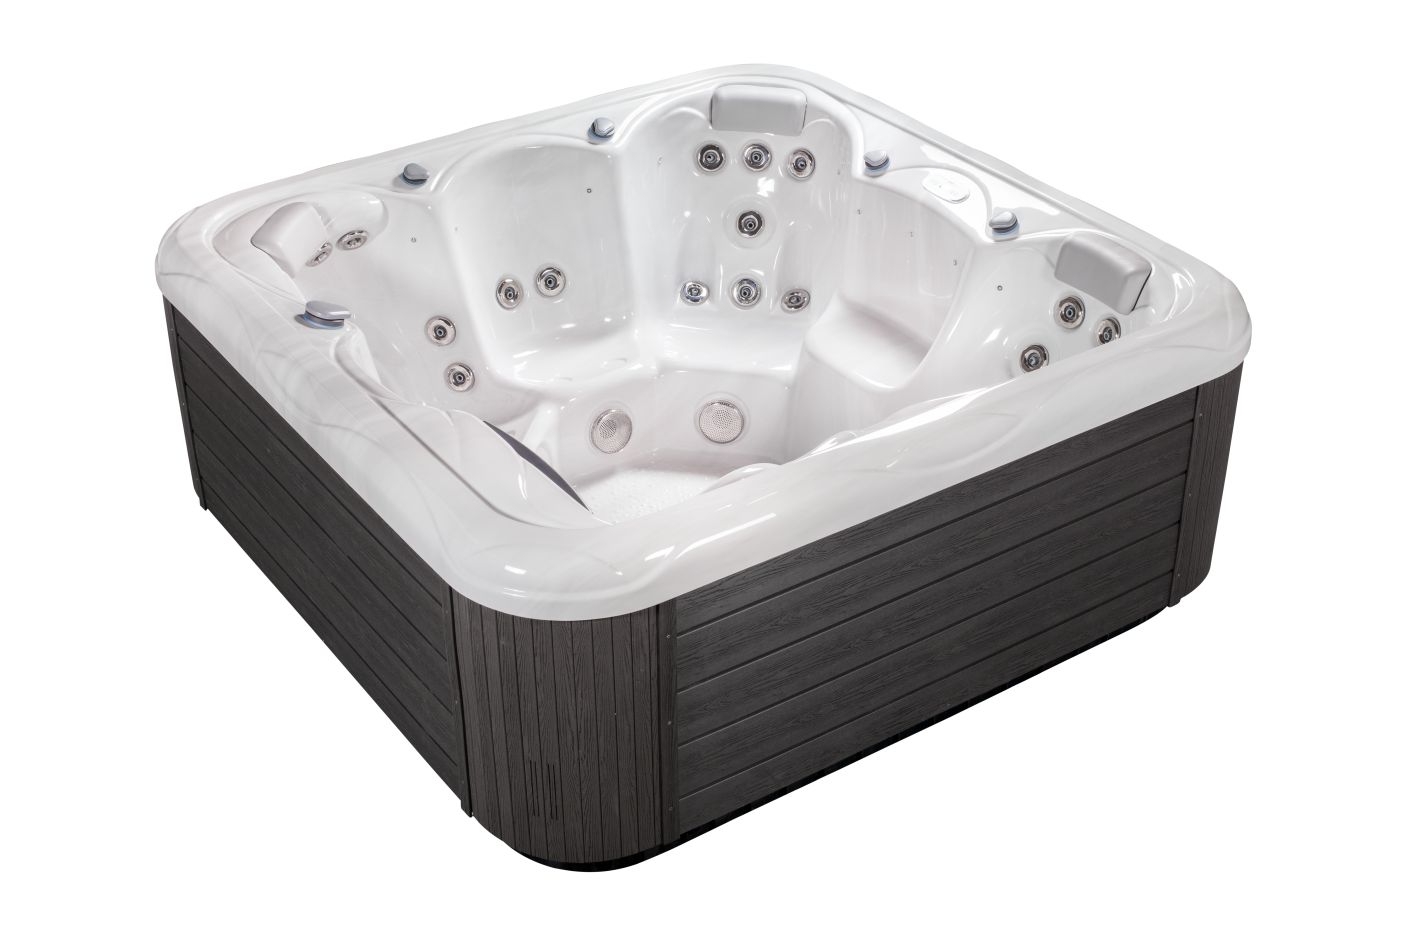 Luxury hot tub